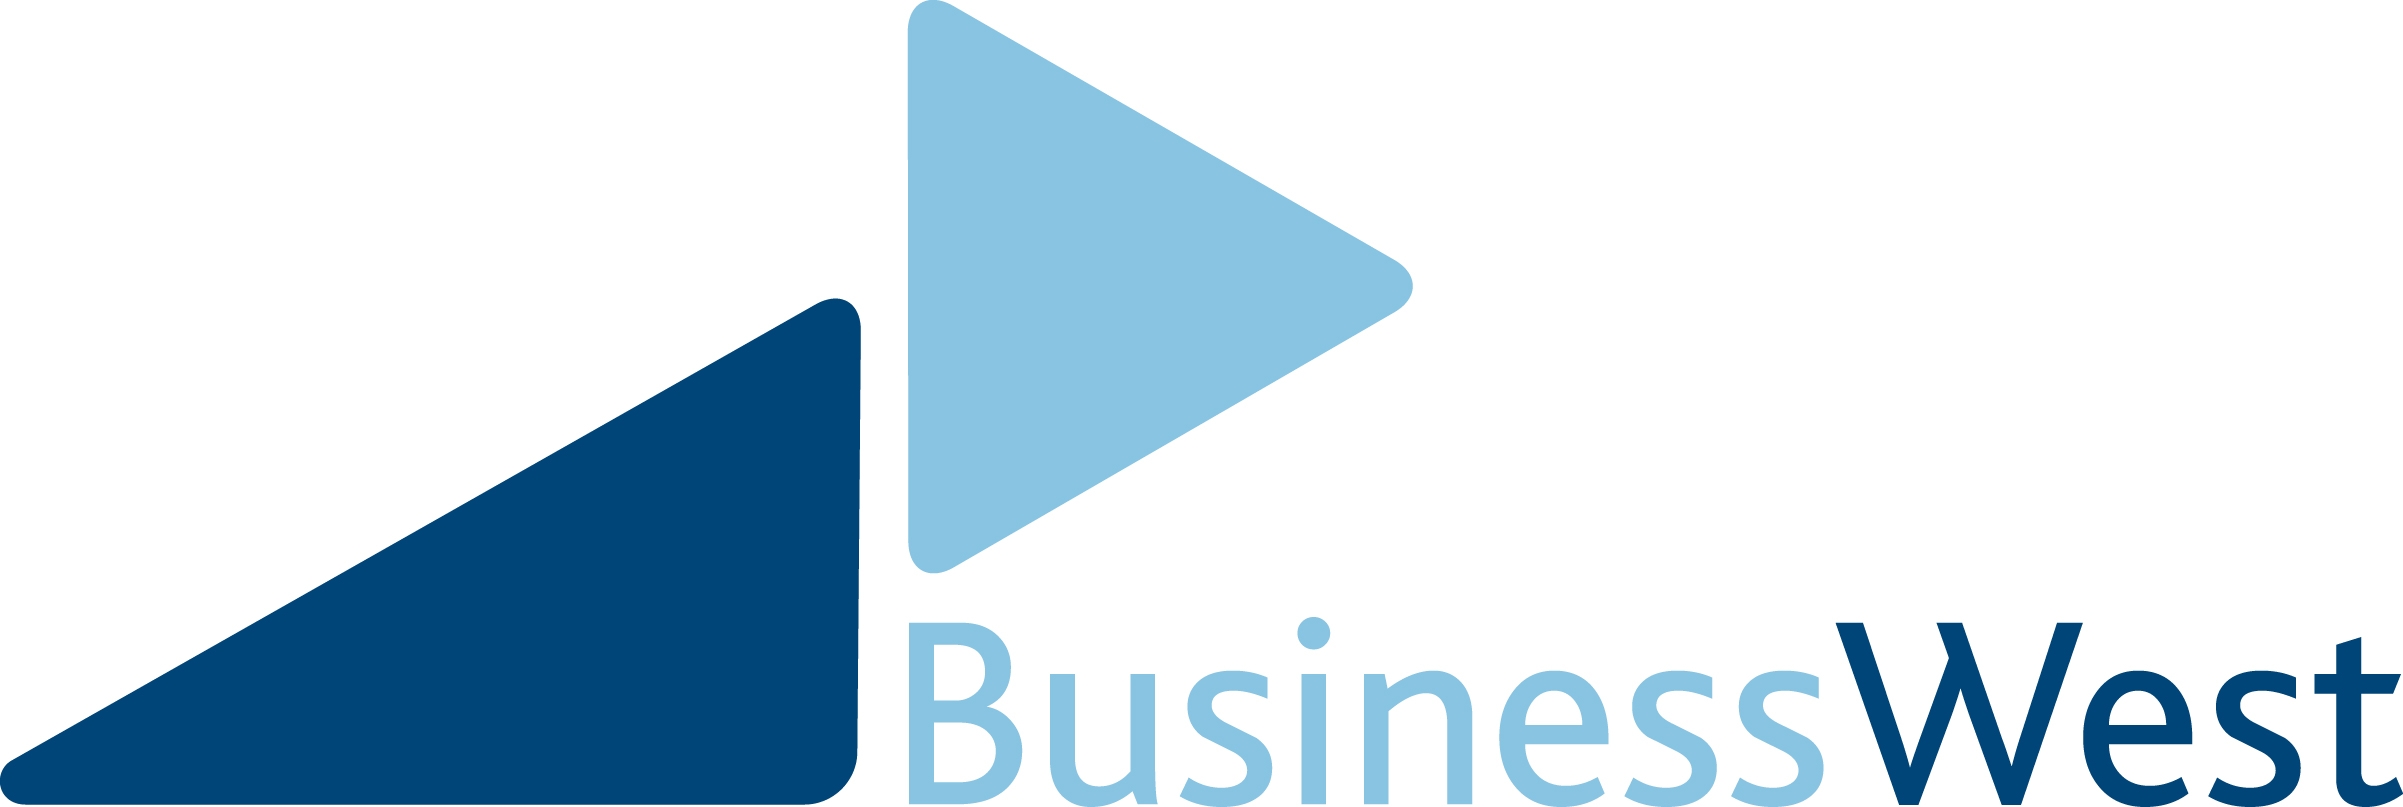 Business West logo 